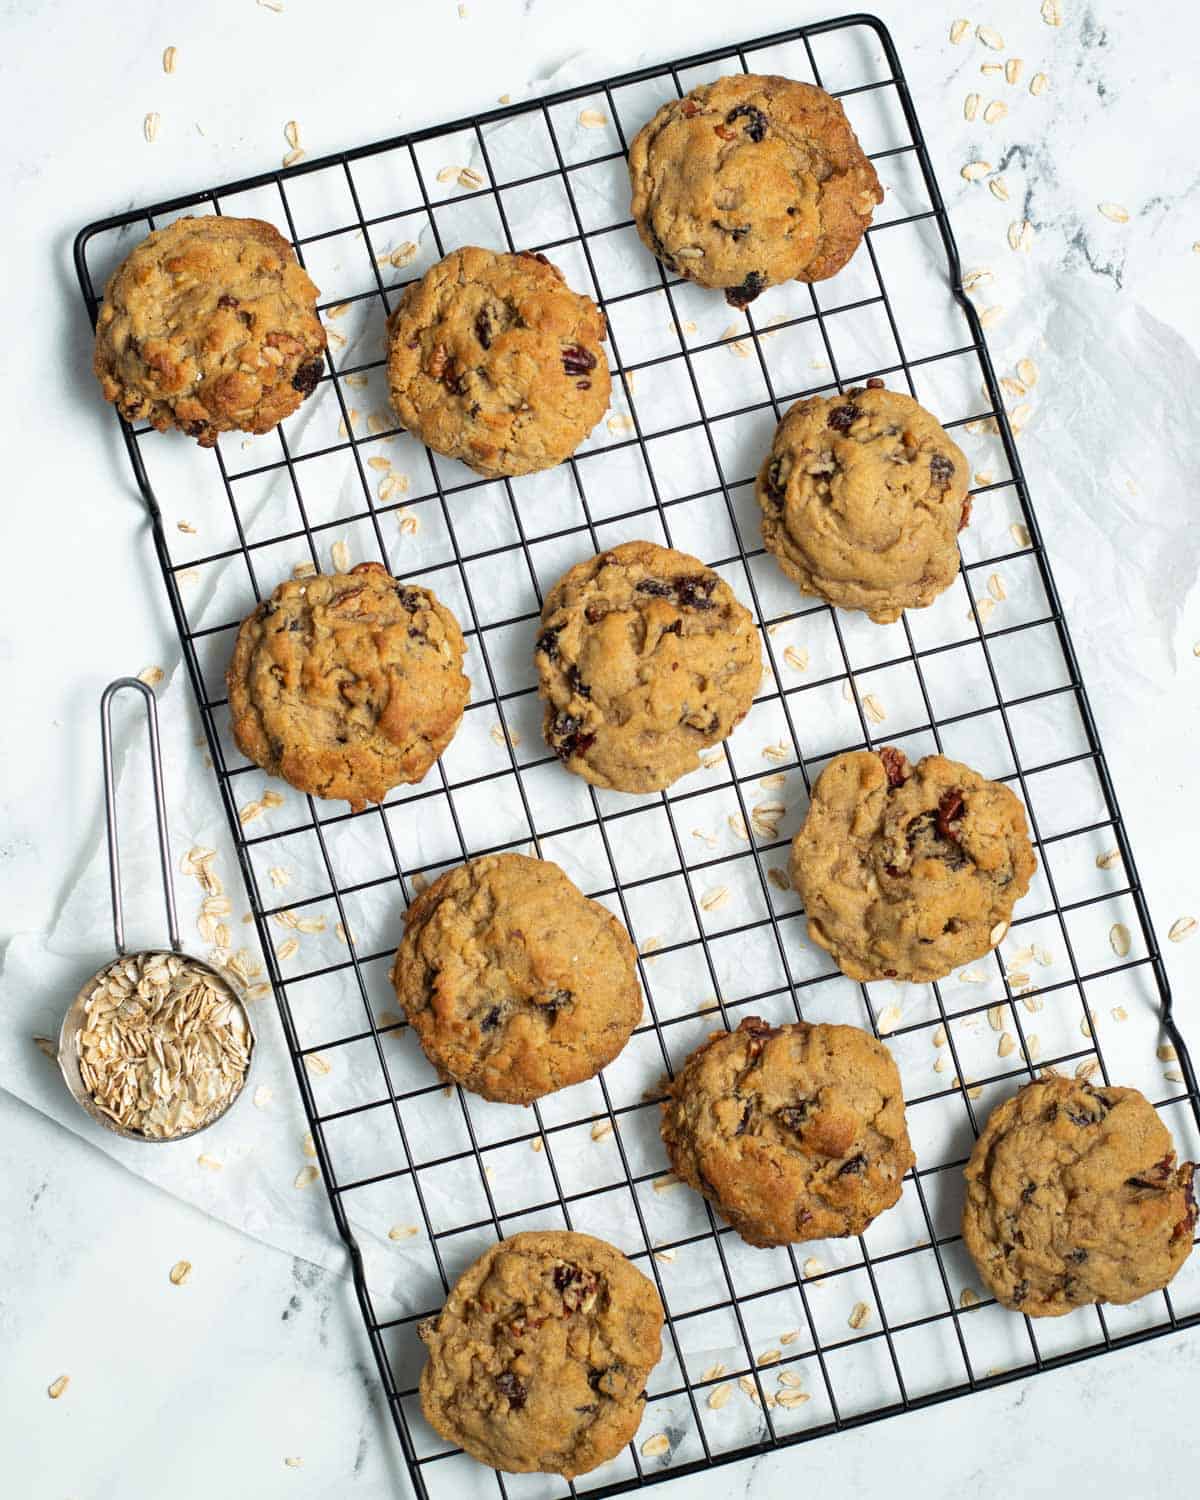 Vegan oatmeal raisin cookies on cooling rack.